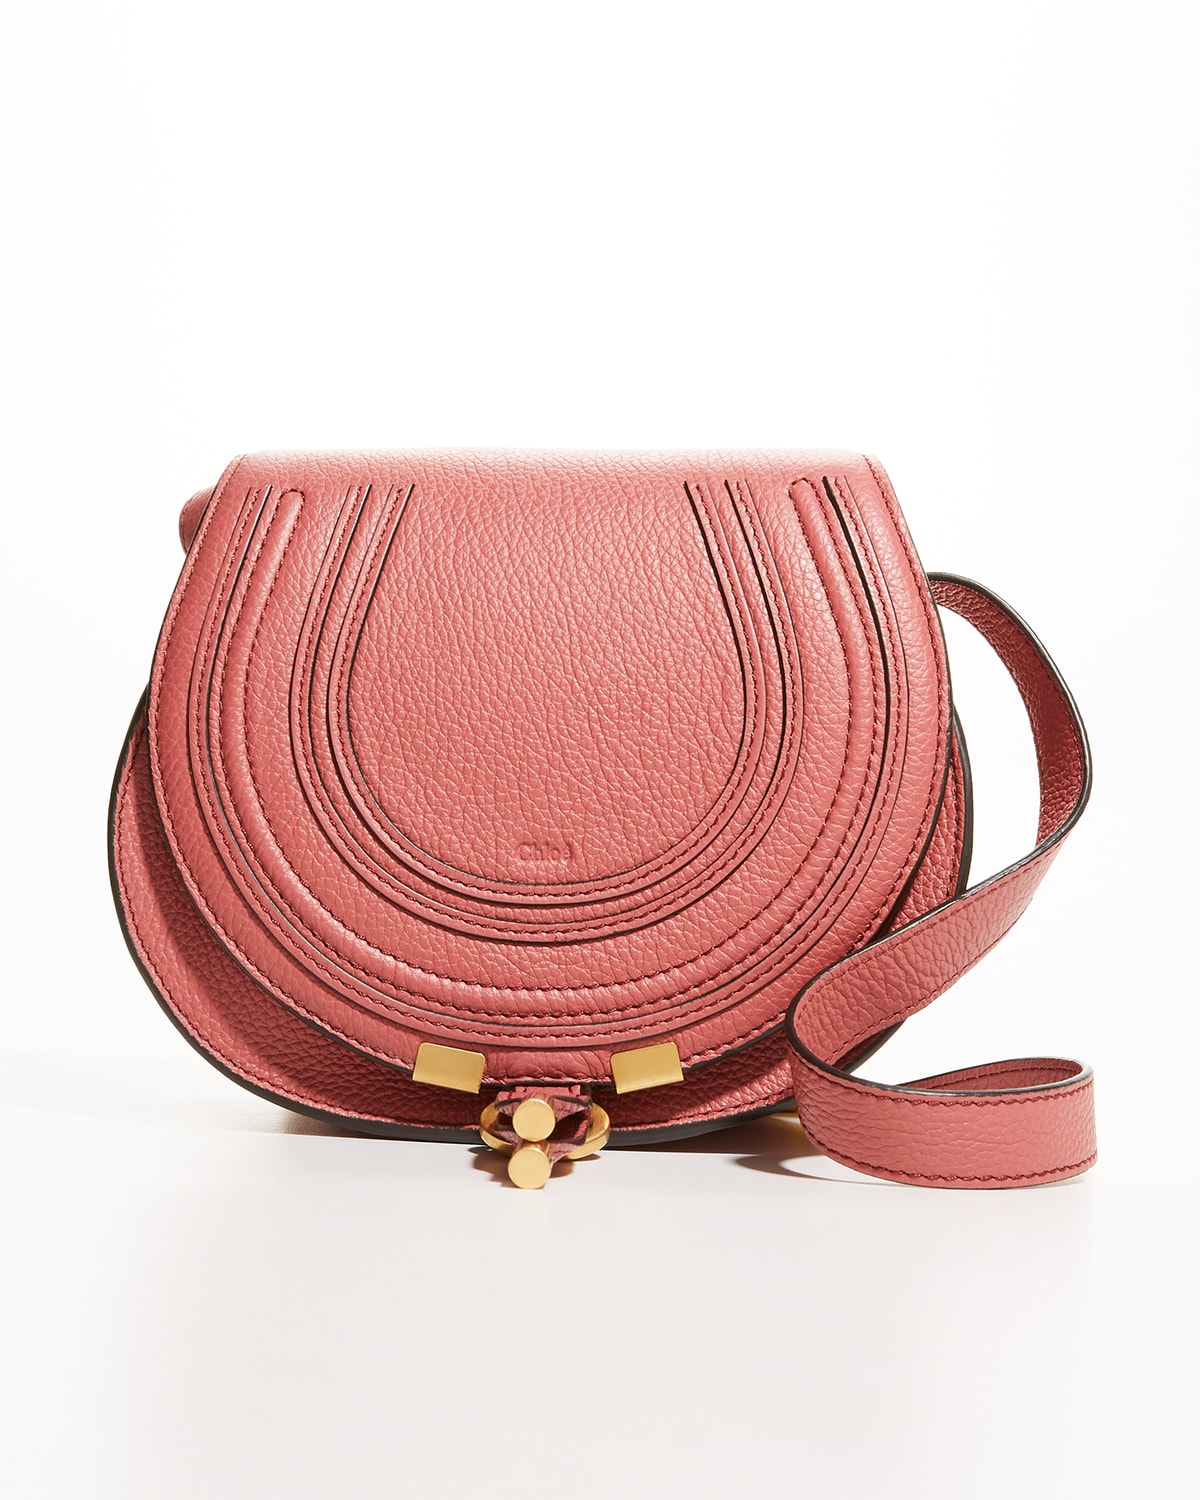 Chloe Marcie Small Leather Crossbody Bag | Neiman Marcus